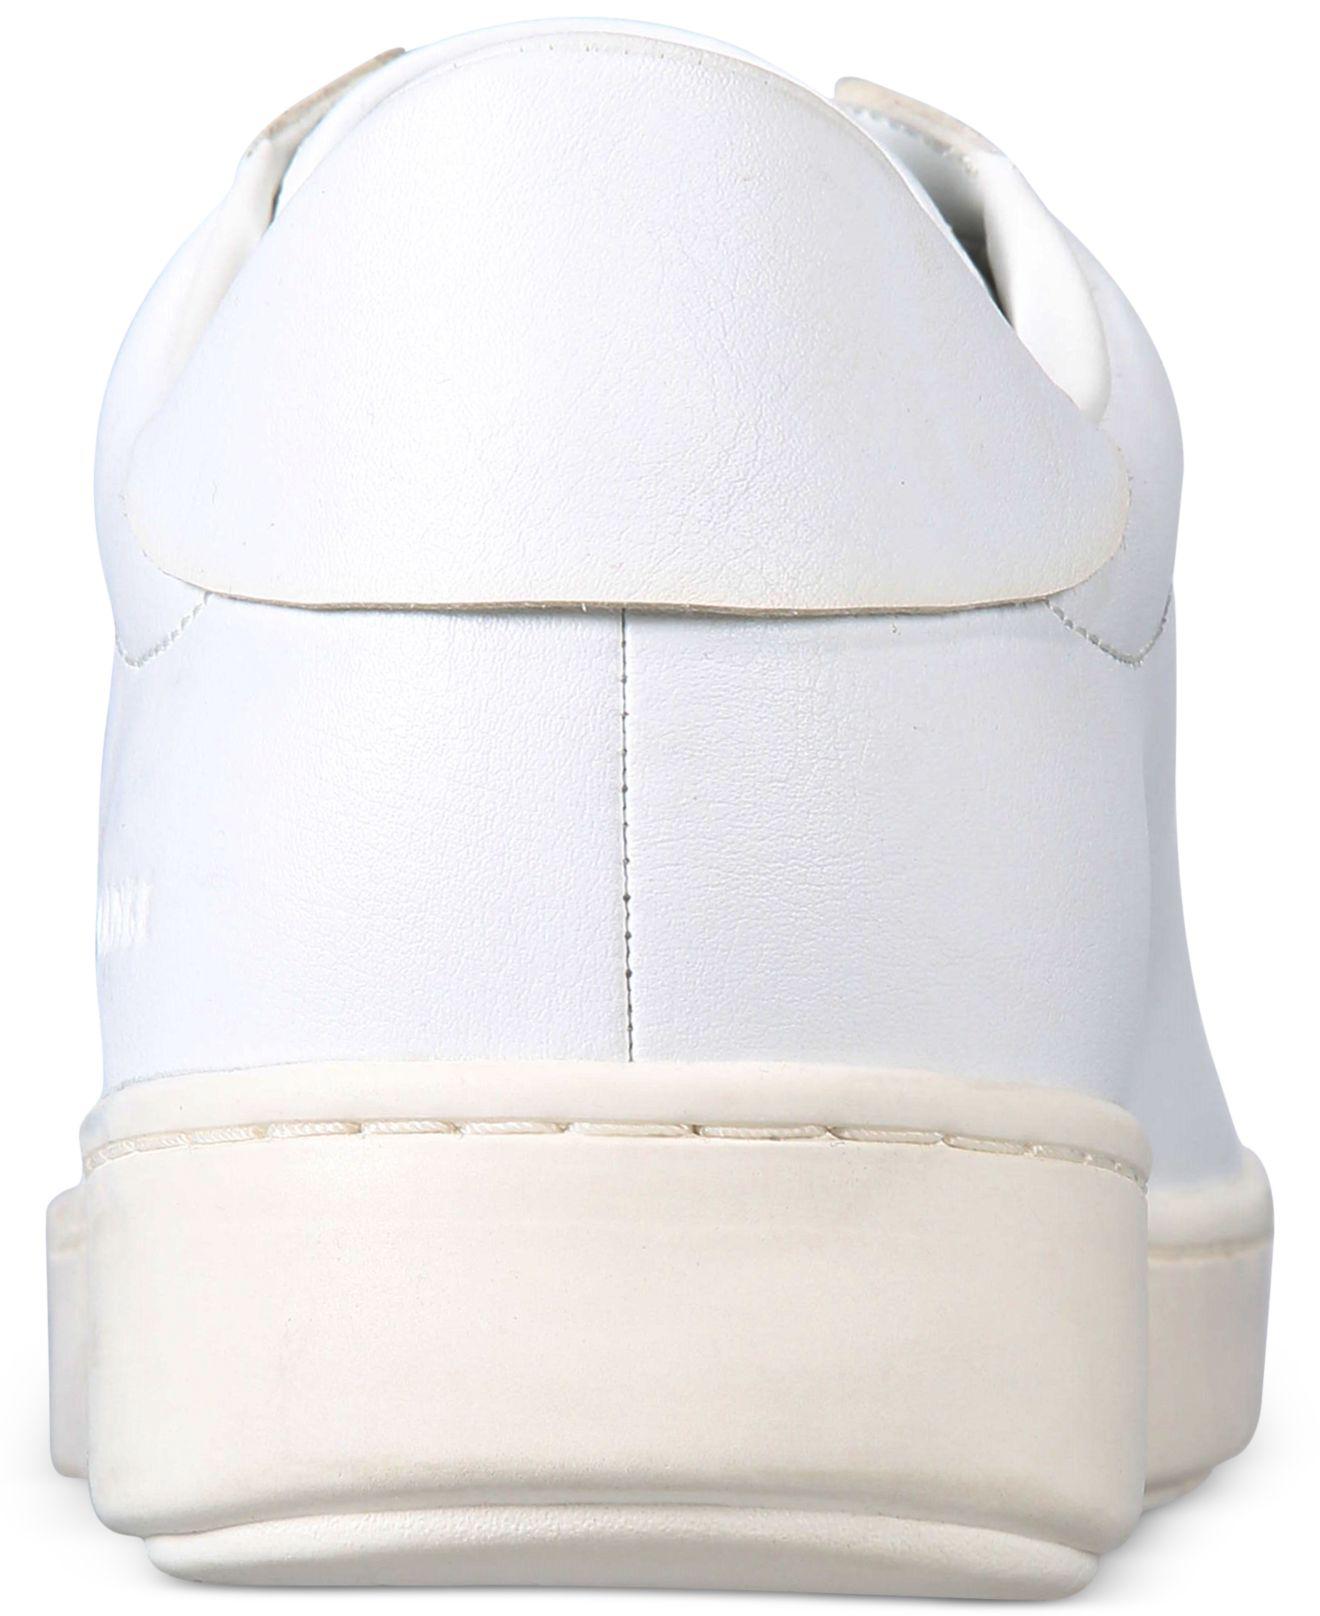 Armani Exchange Men's Hidden Lace Sneakers in White for Men - Lyst